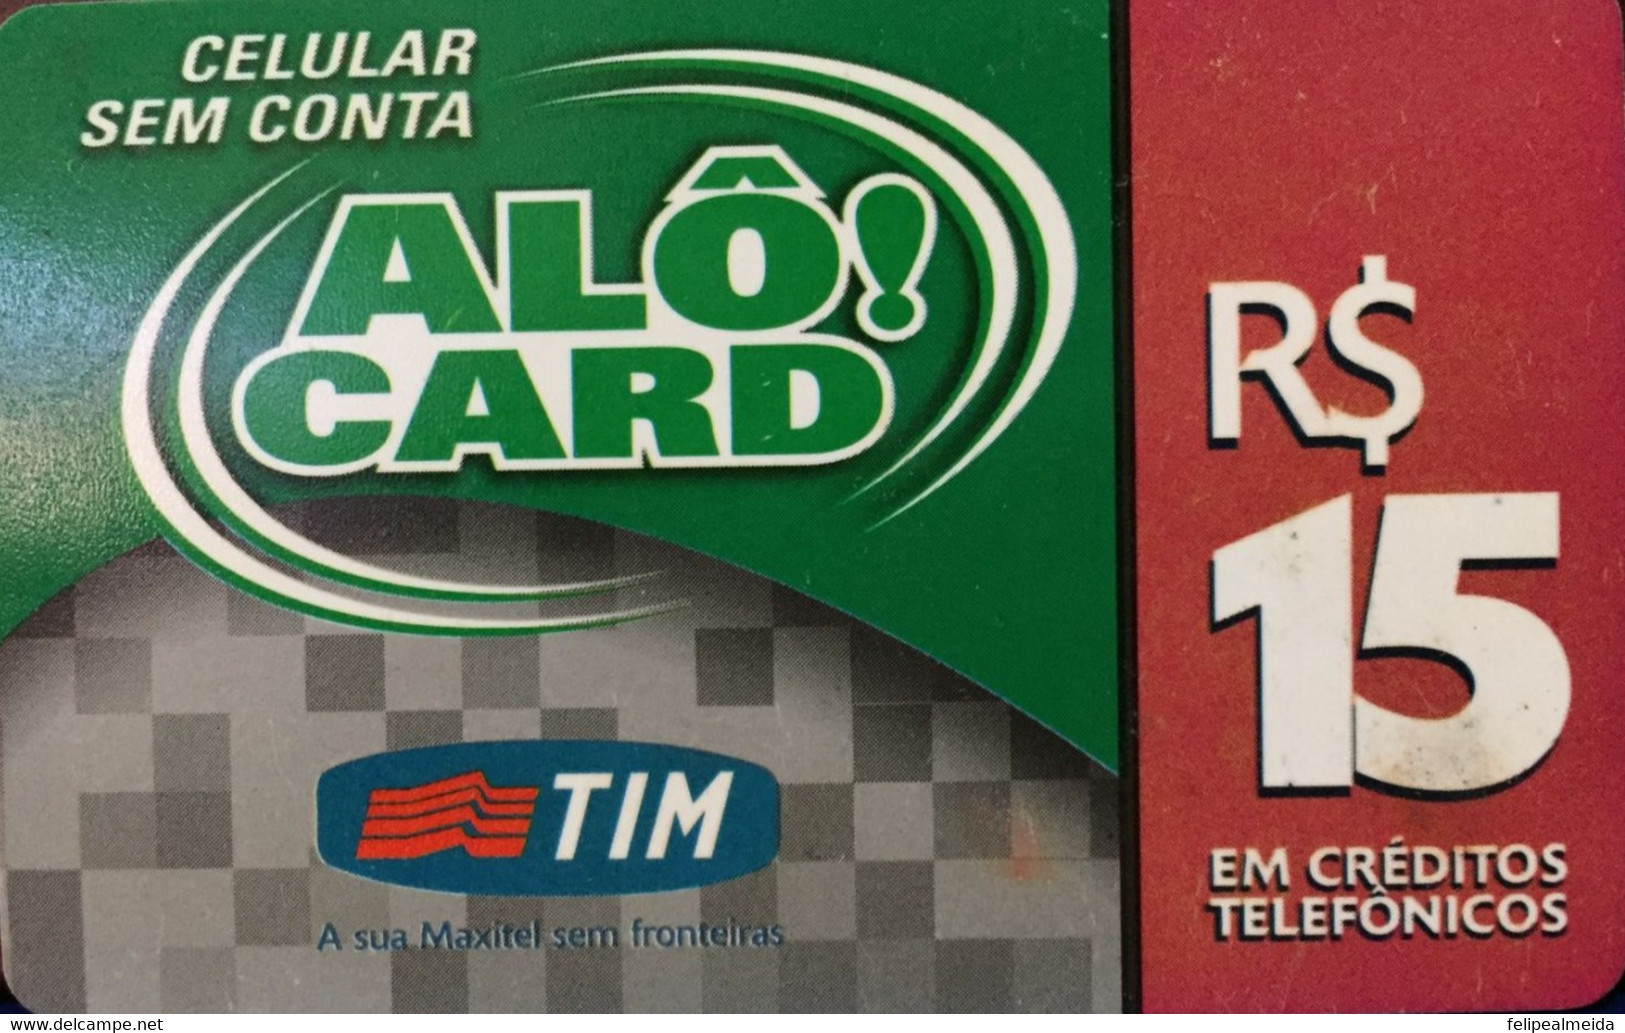 Pre Paid Phone Card Manufactured By Tim Maxitel 2004 - 15 Reais Credit - Telecom Operators